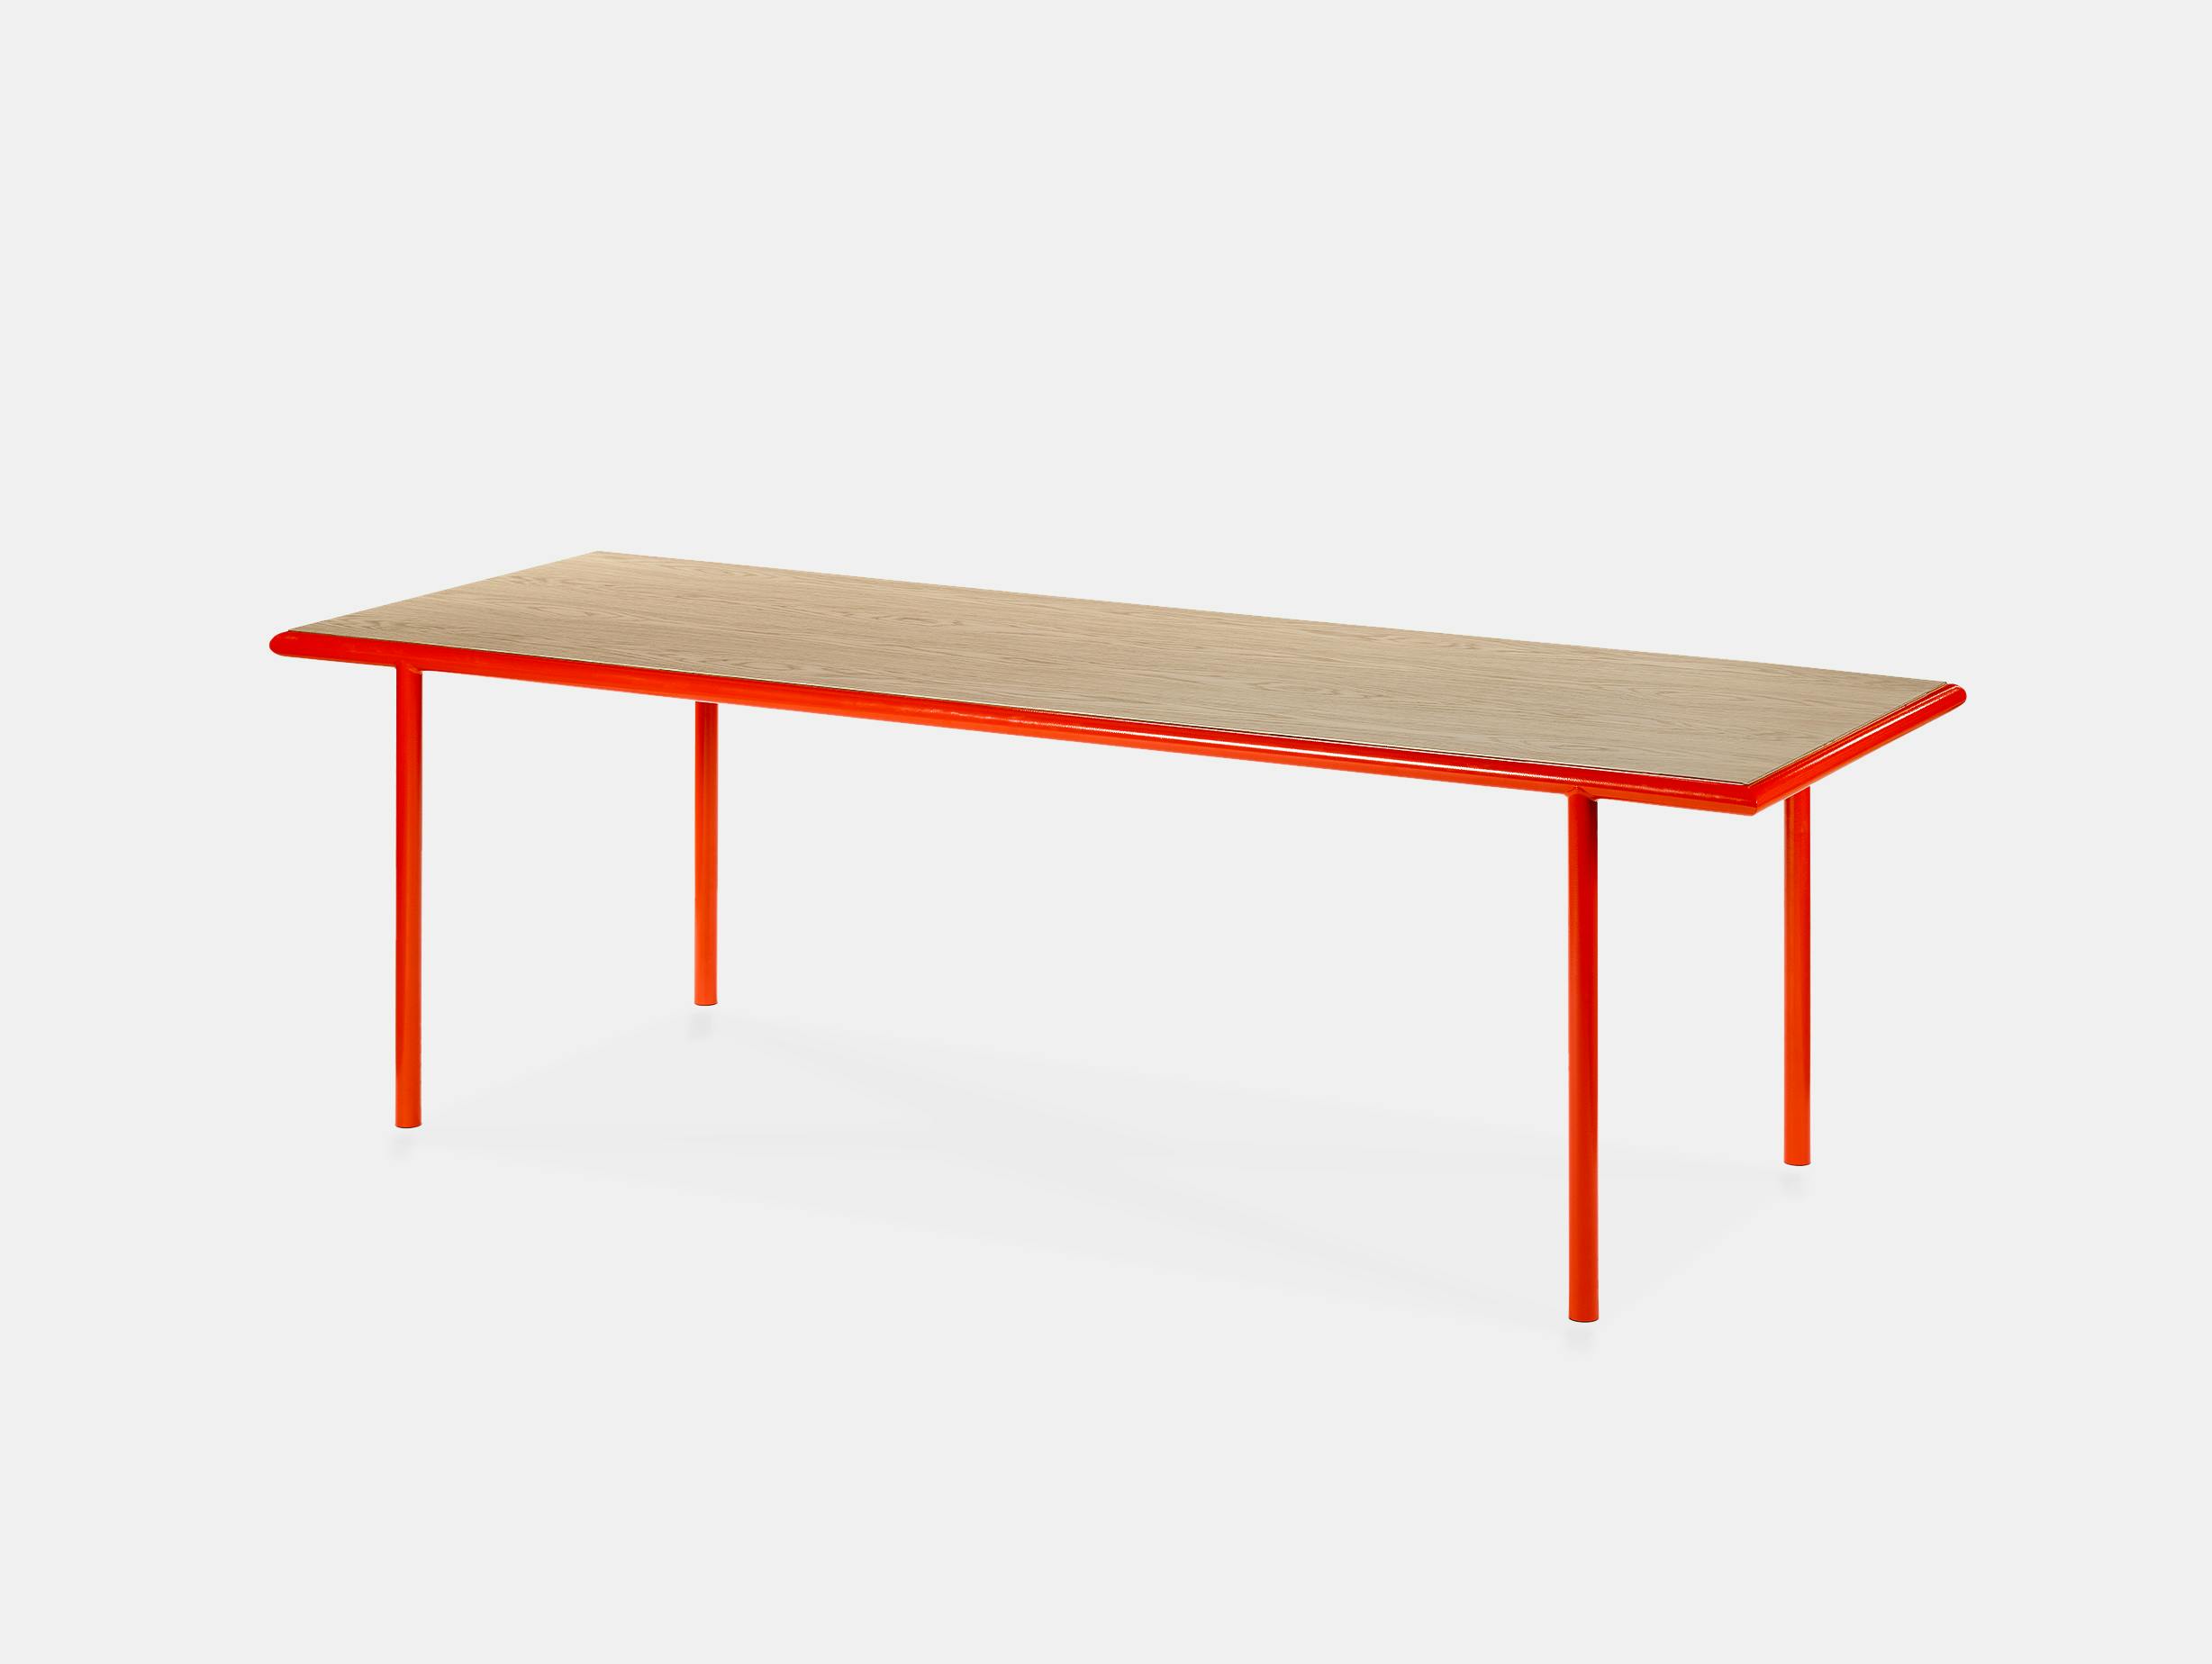 Muller van severen wooden table rectangular red oak